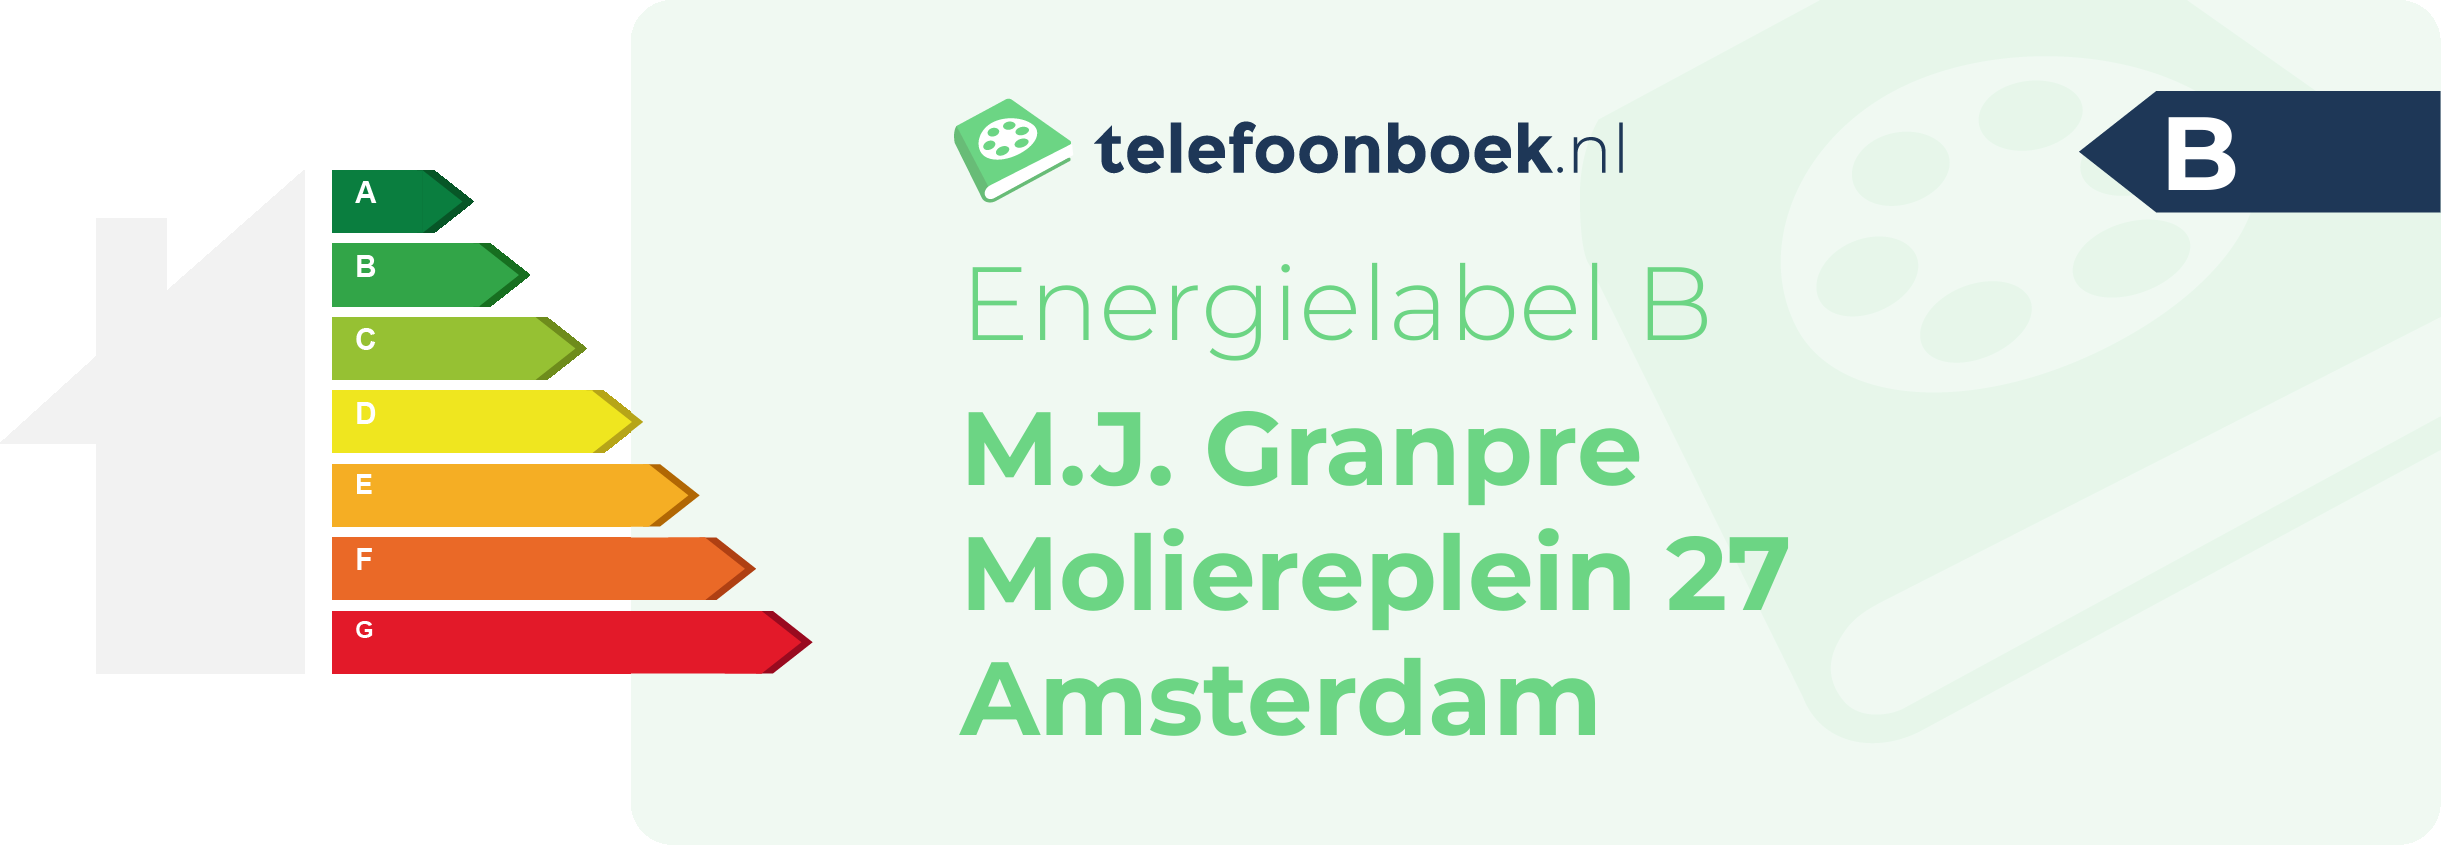 Energielabel M.J. Granpre Moliereplein 27 Amsterdam